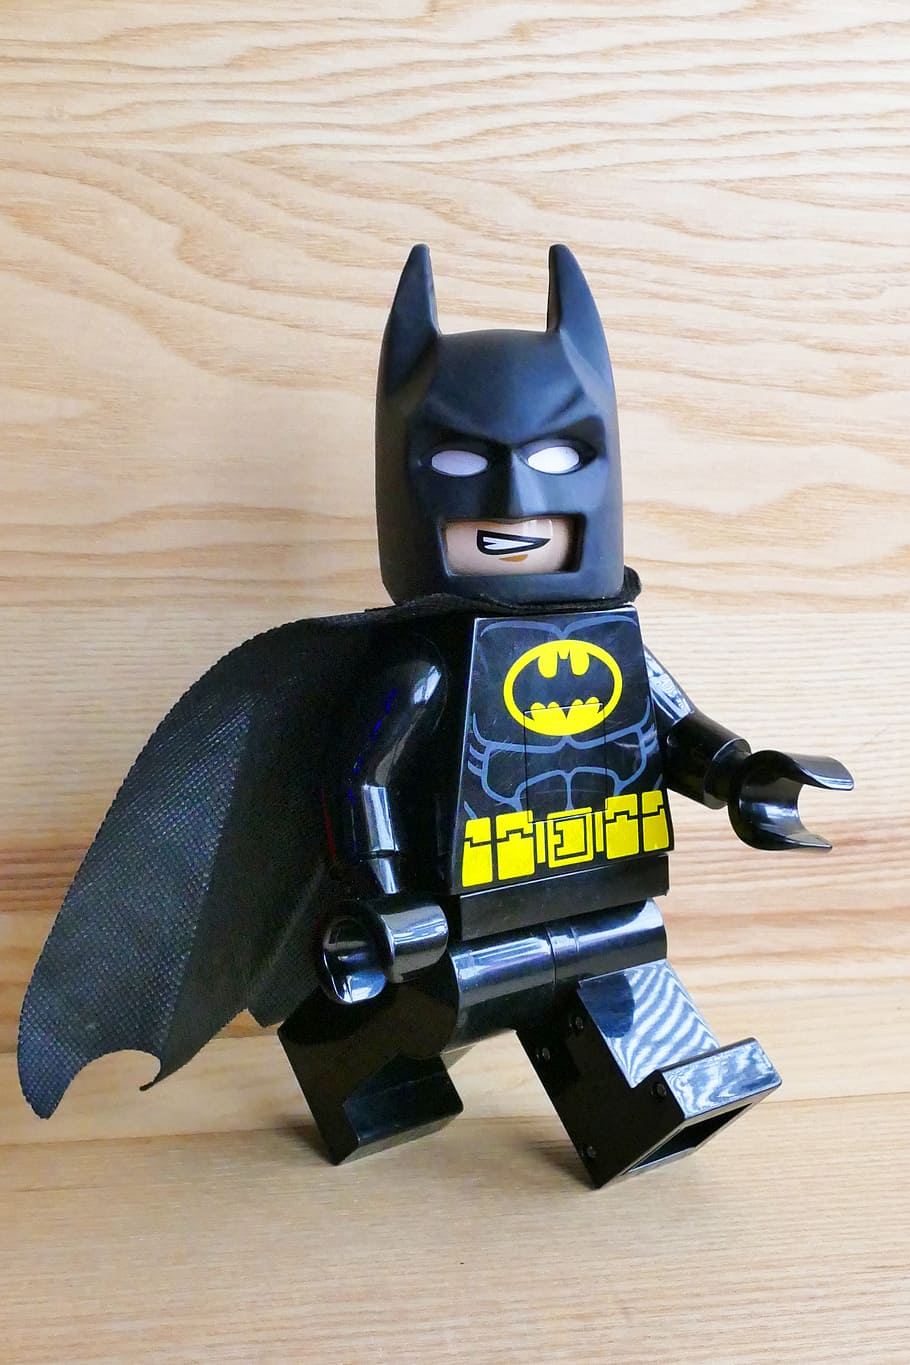 LEGO batman minifig, toys, kids, child, play, childhood, fun